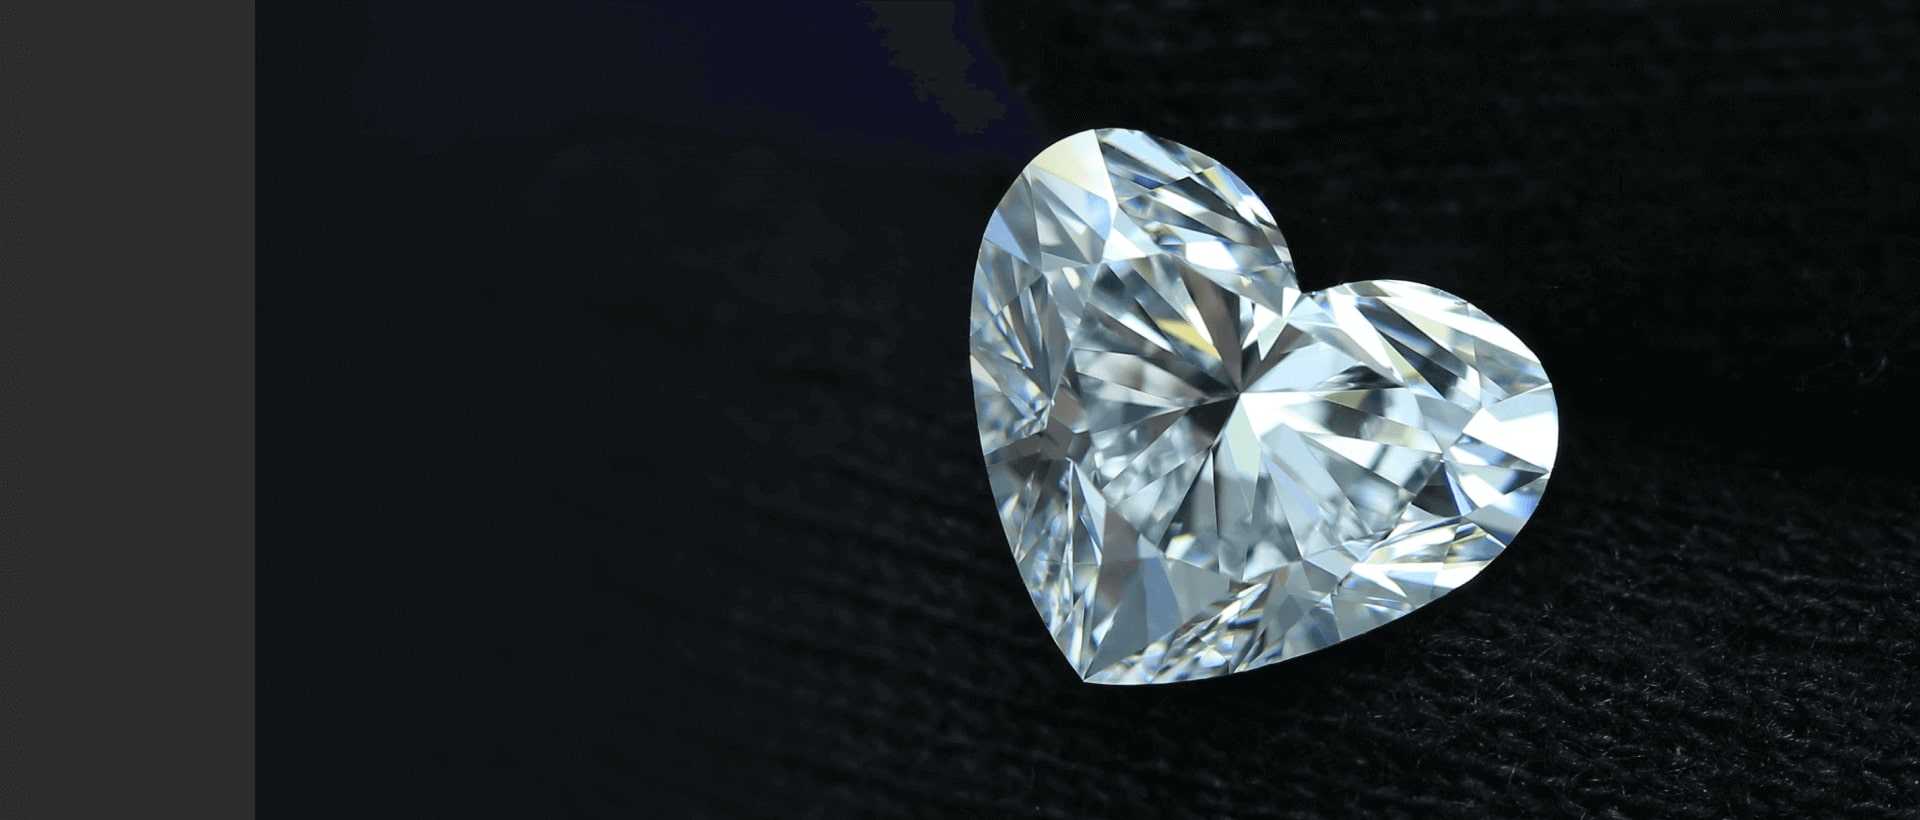 Brilliant Cut heart shaped diamond